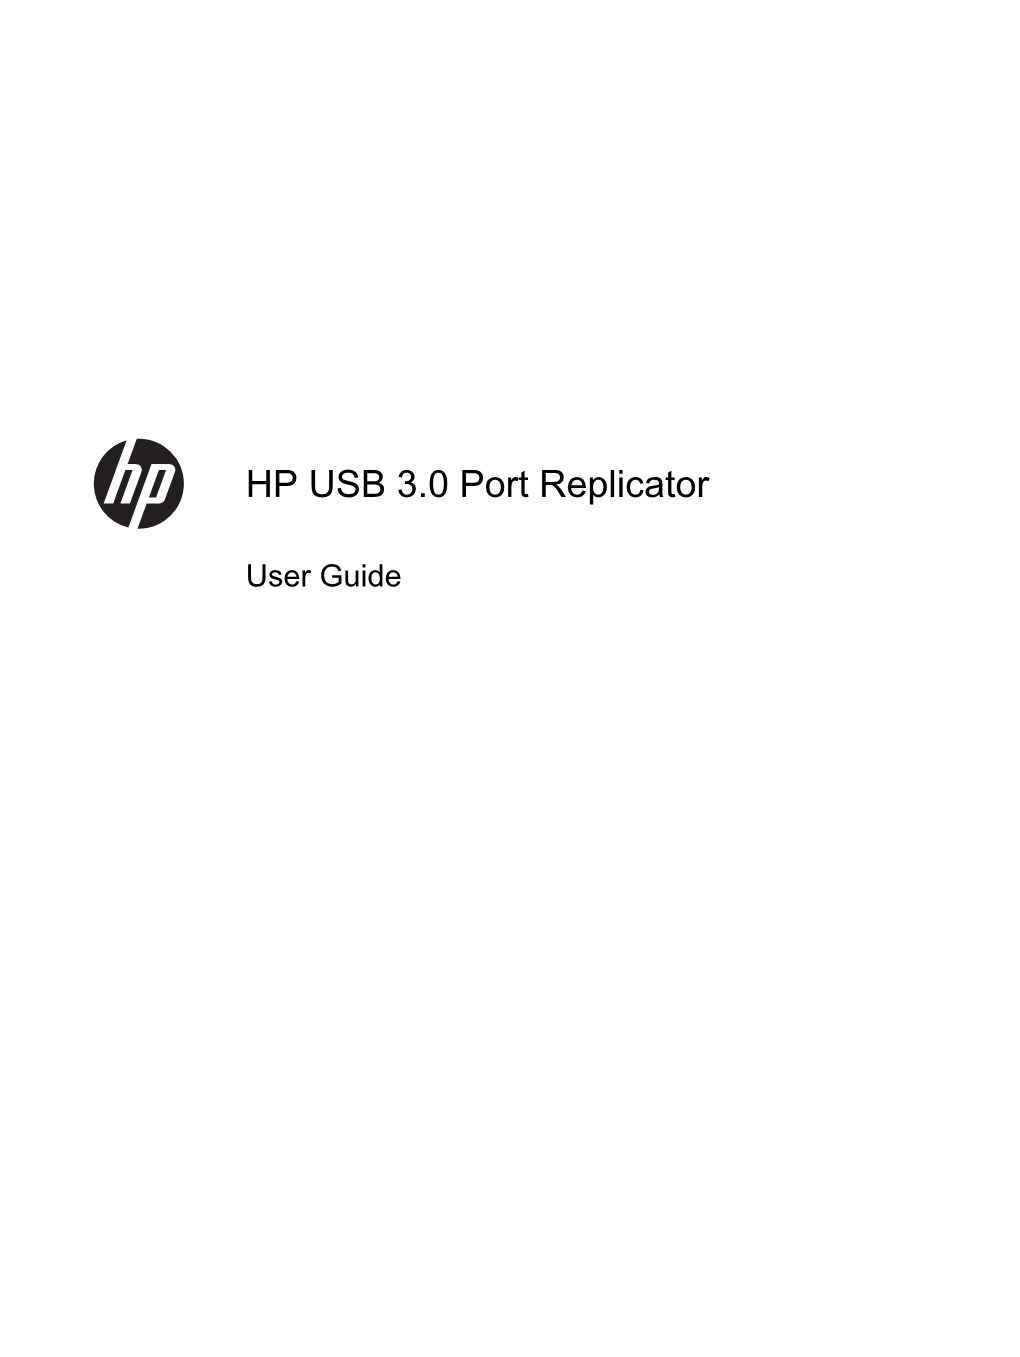 HP USB 3.0 Port Replicator